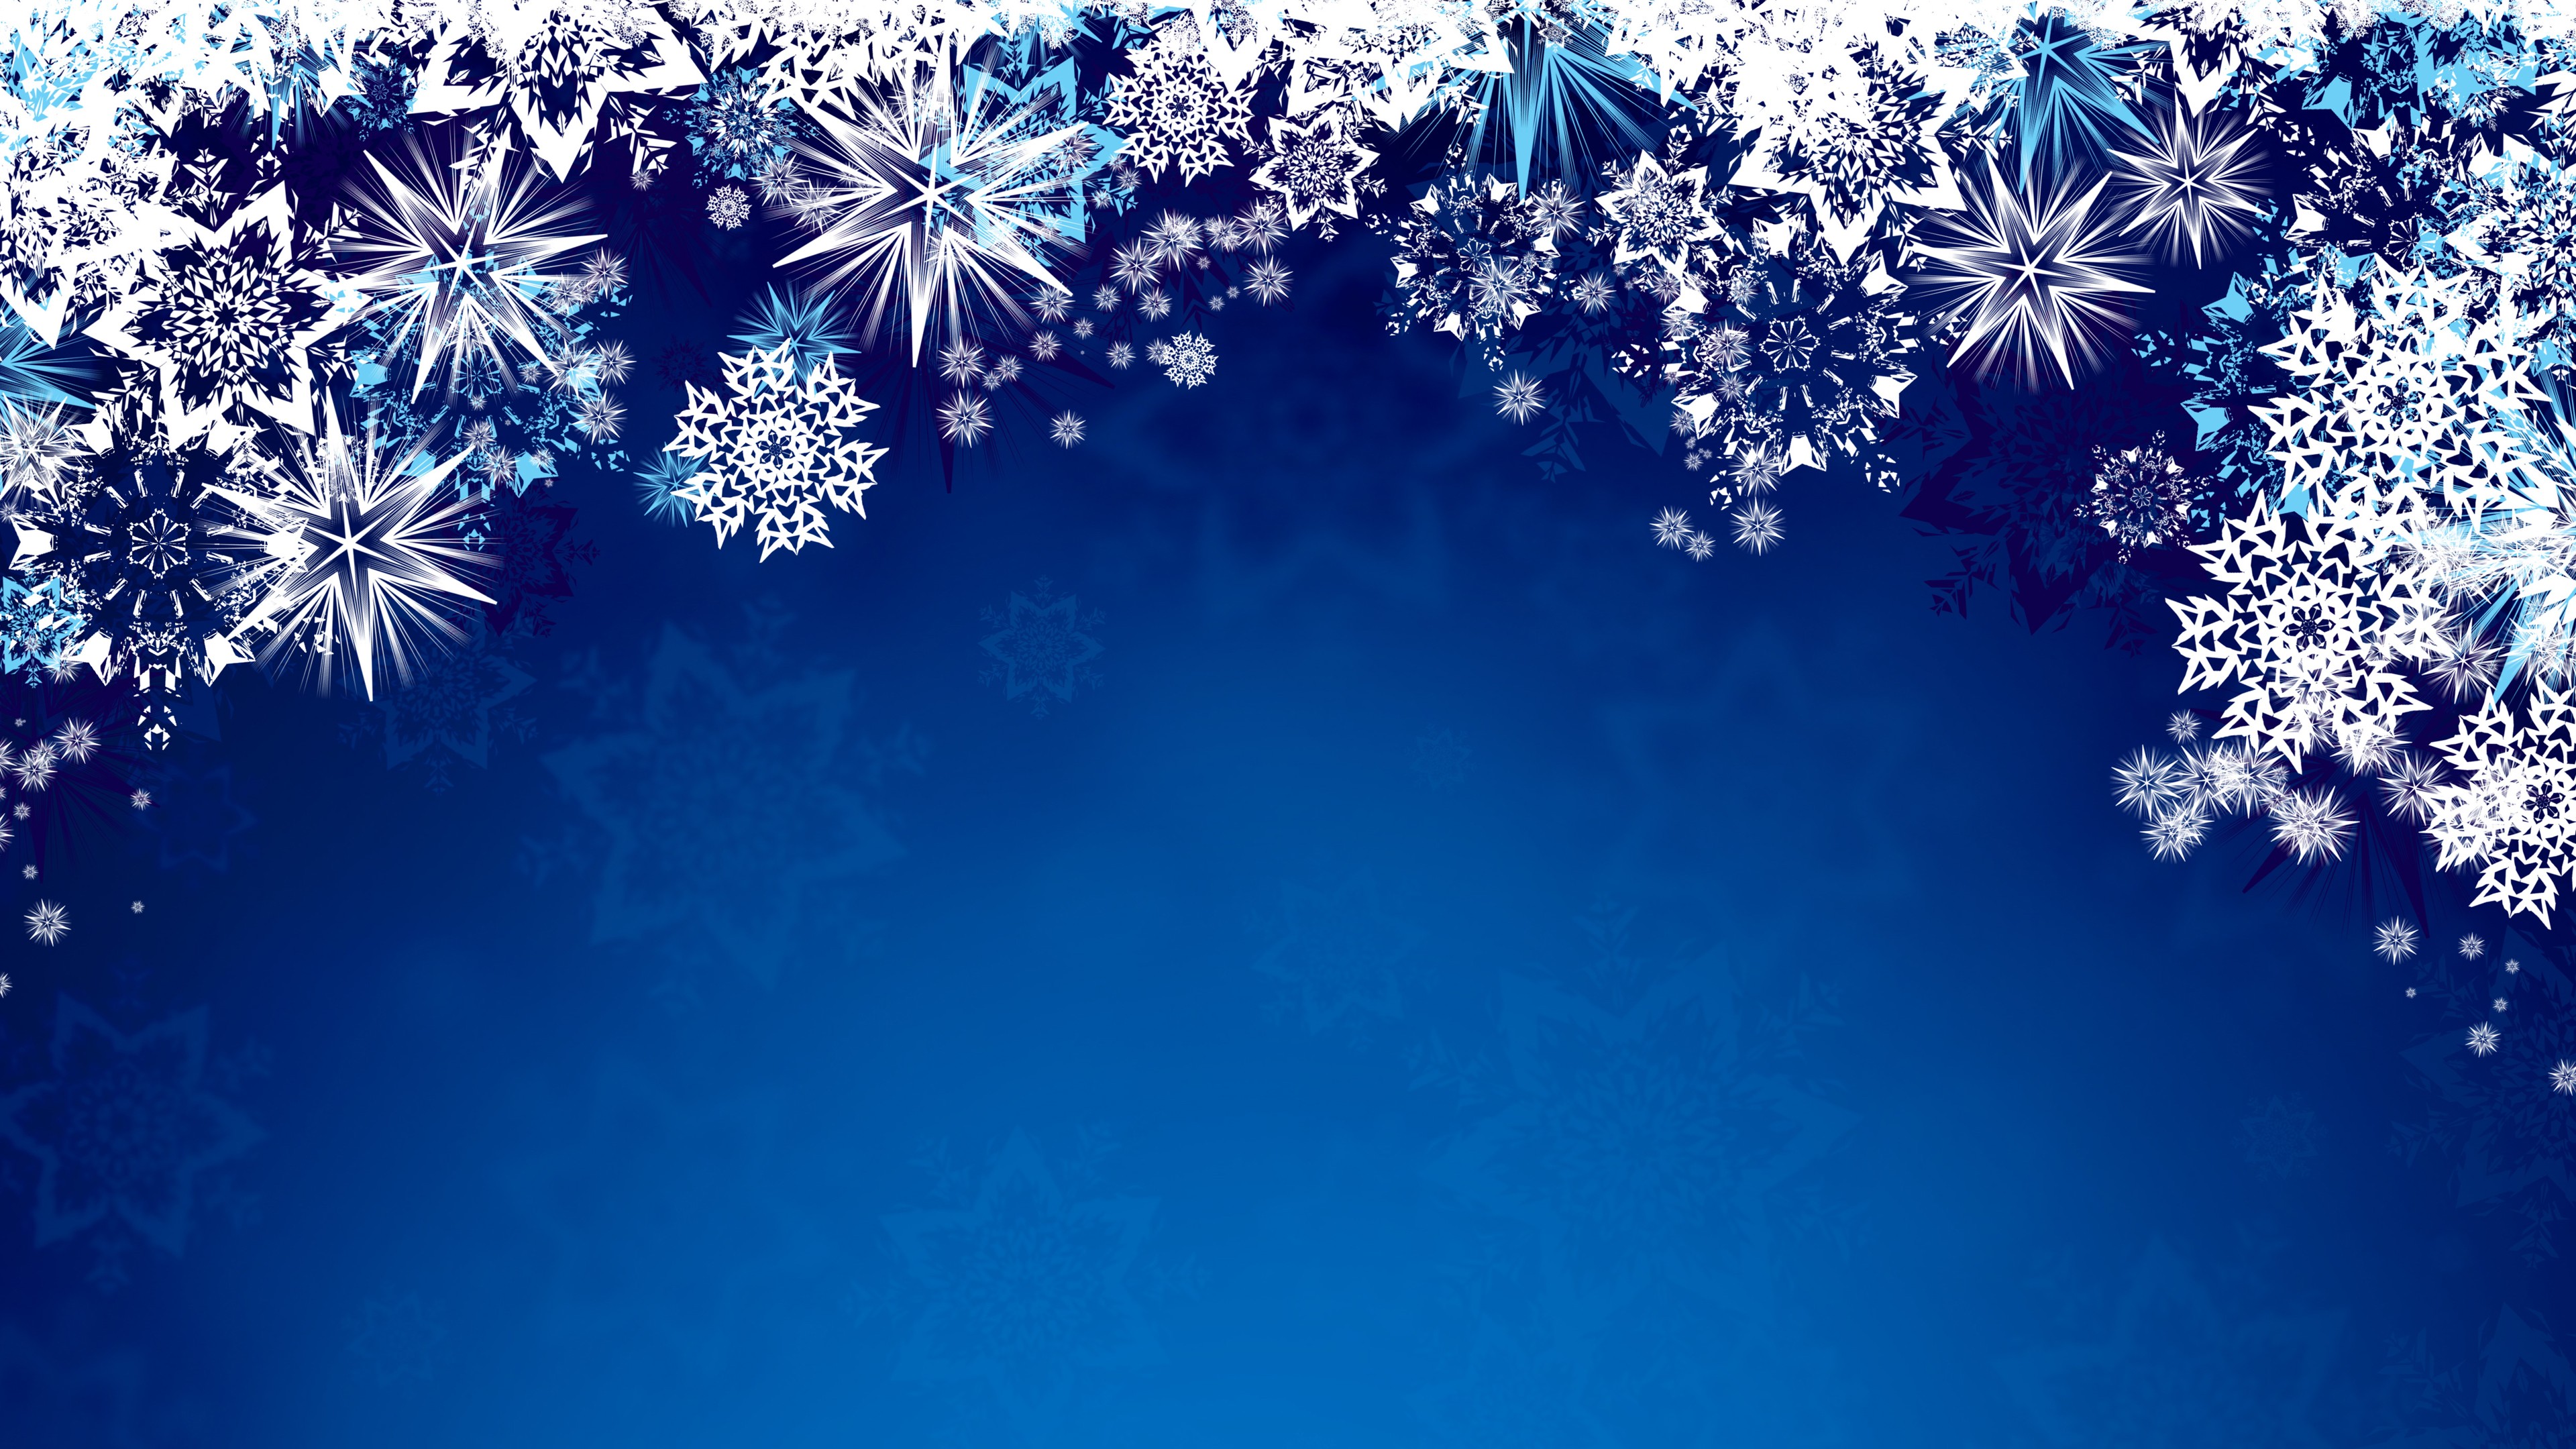 General 3840x2160 vector snowflakes blue background blue digital art